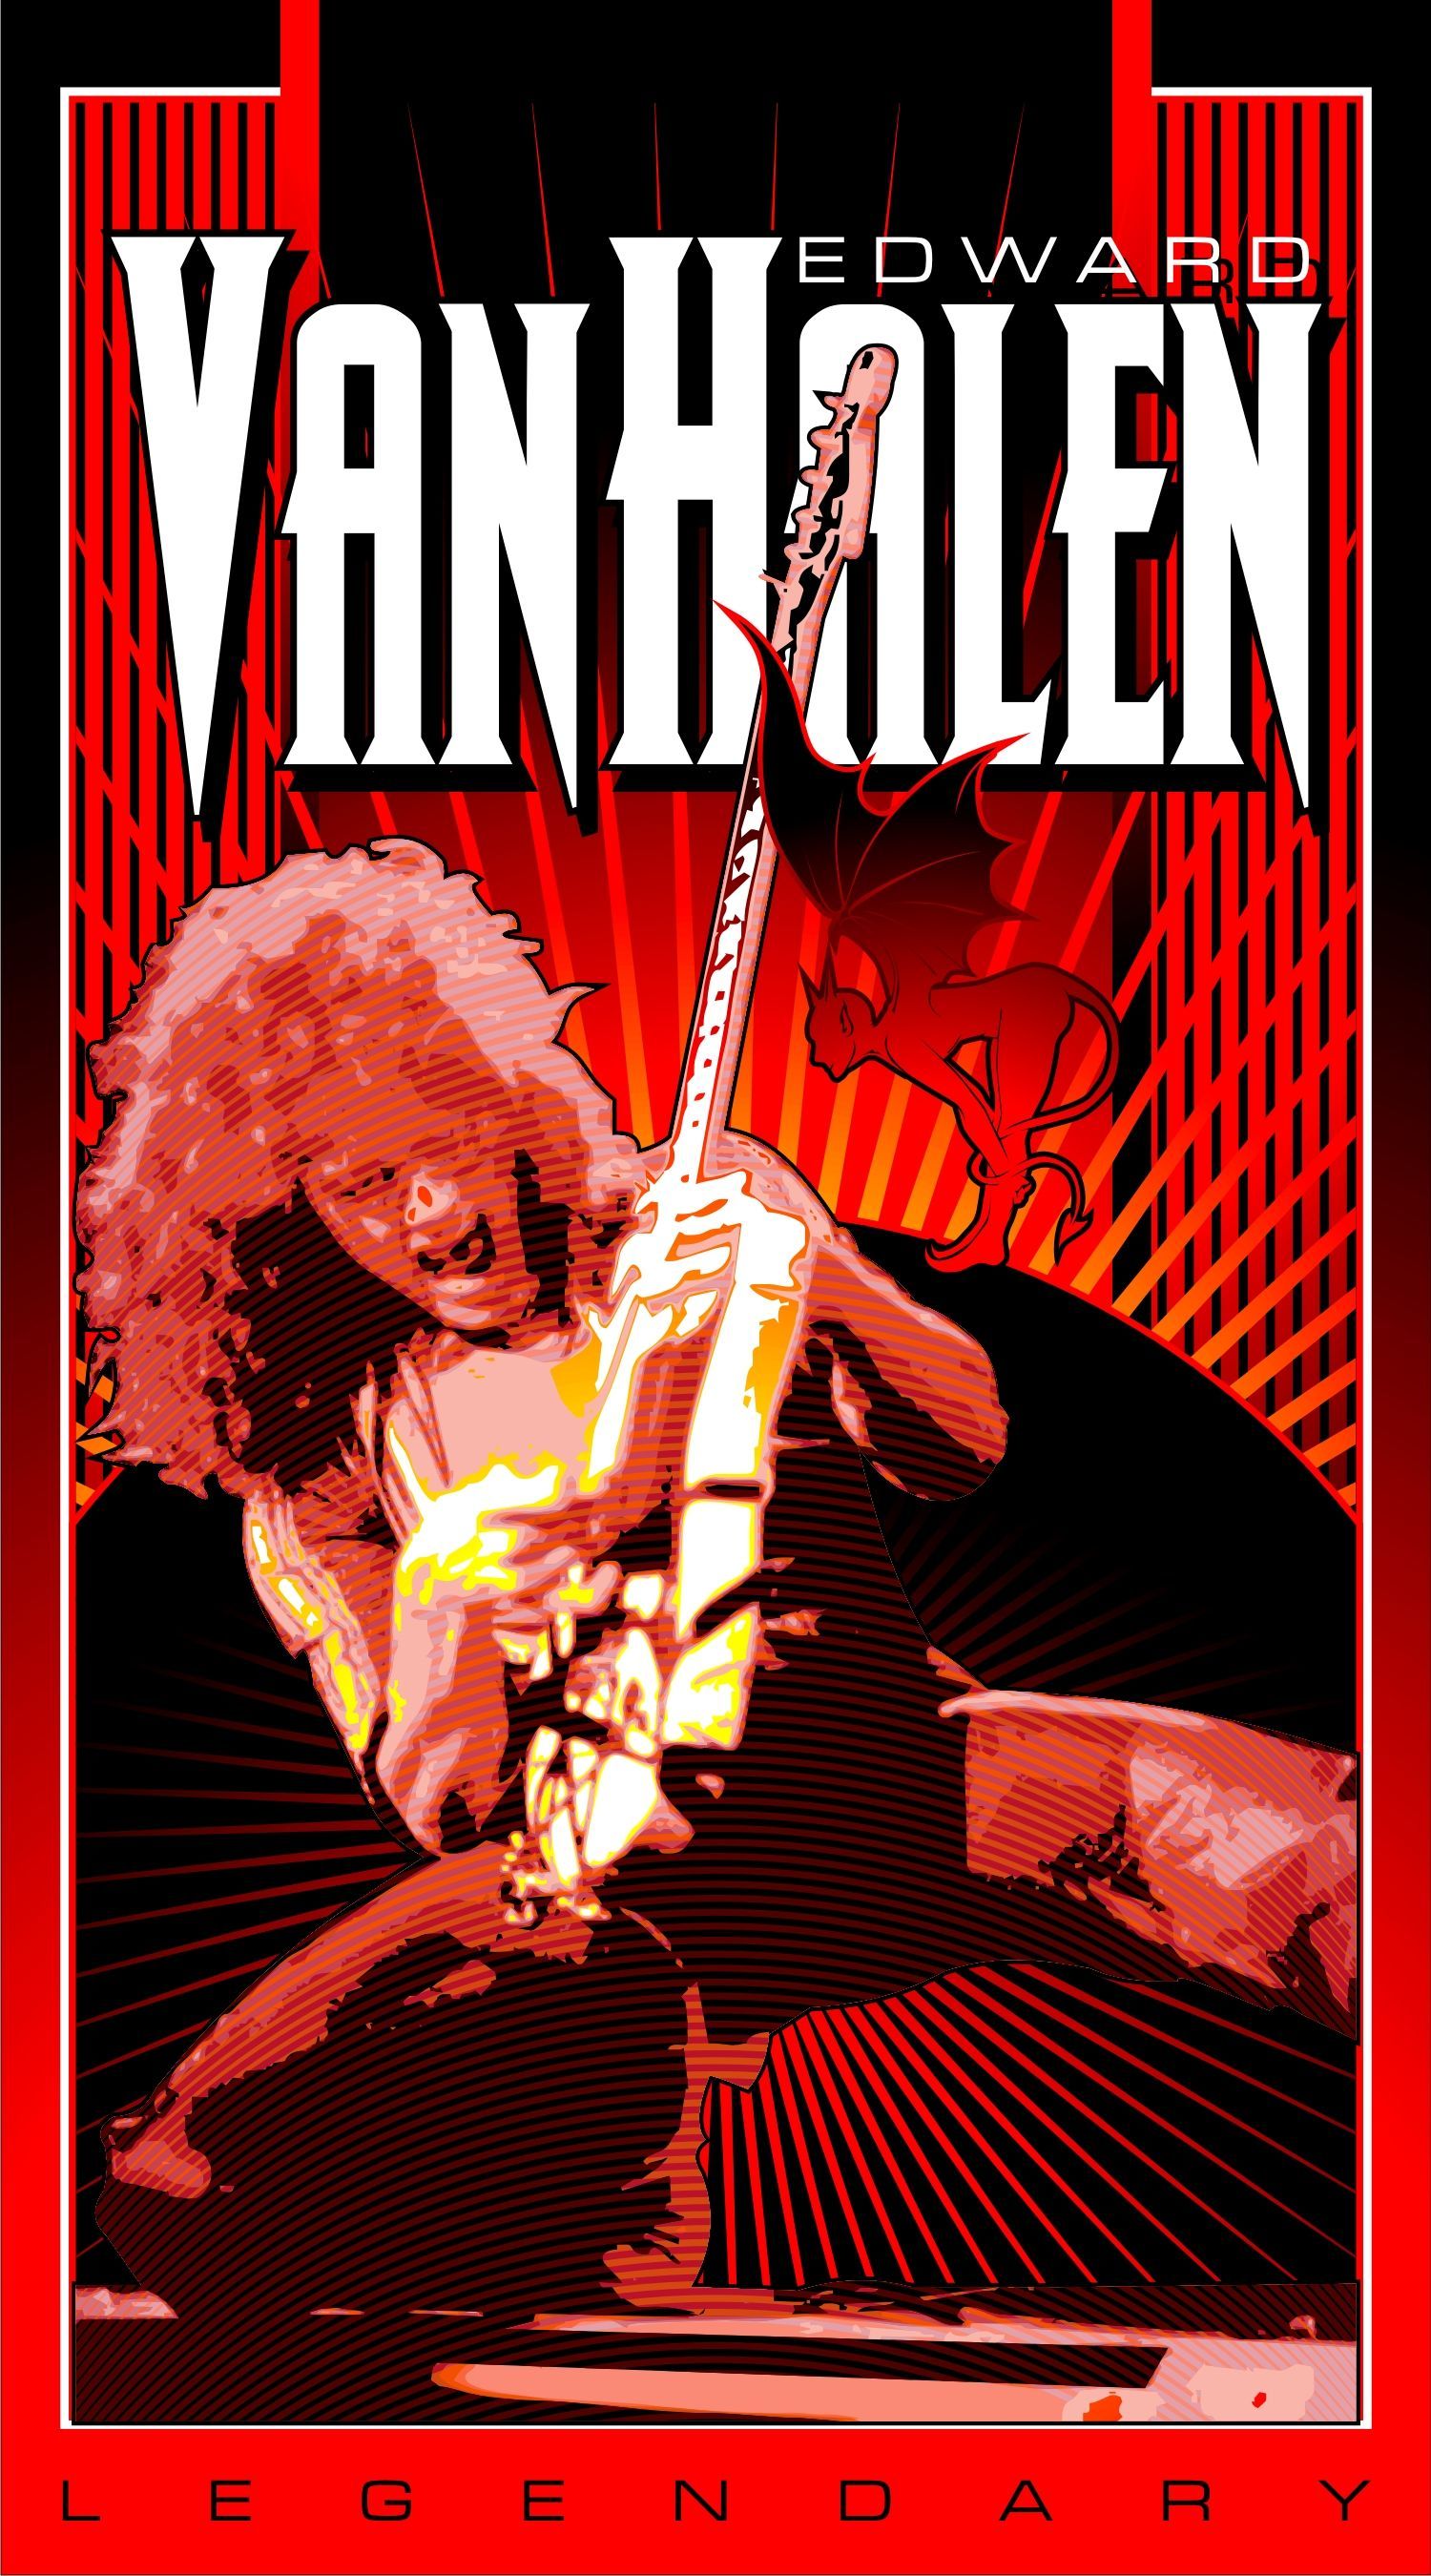 Eddie Van Halen Hintergrundbild 1500x2700. EVH Legendary poster. Rock band posters, Rock poster art, Vintage music posters